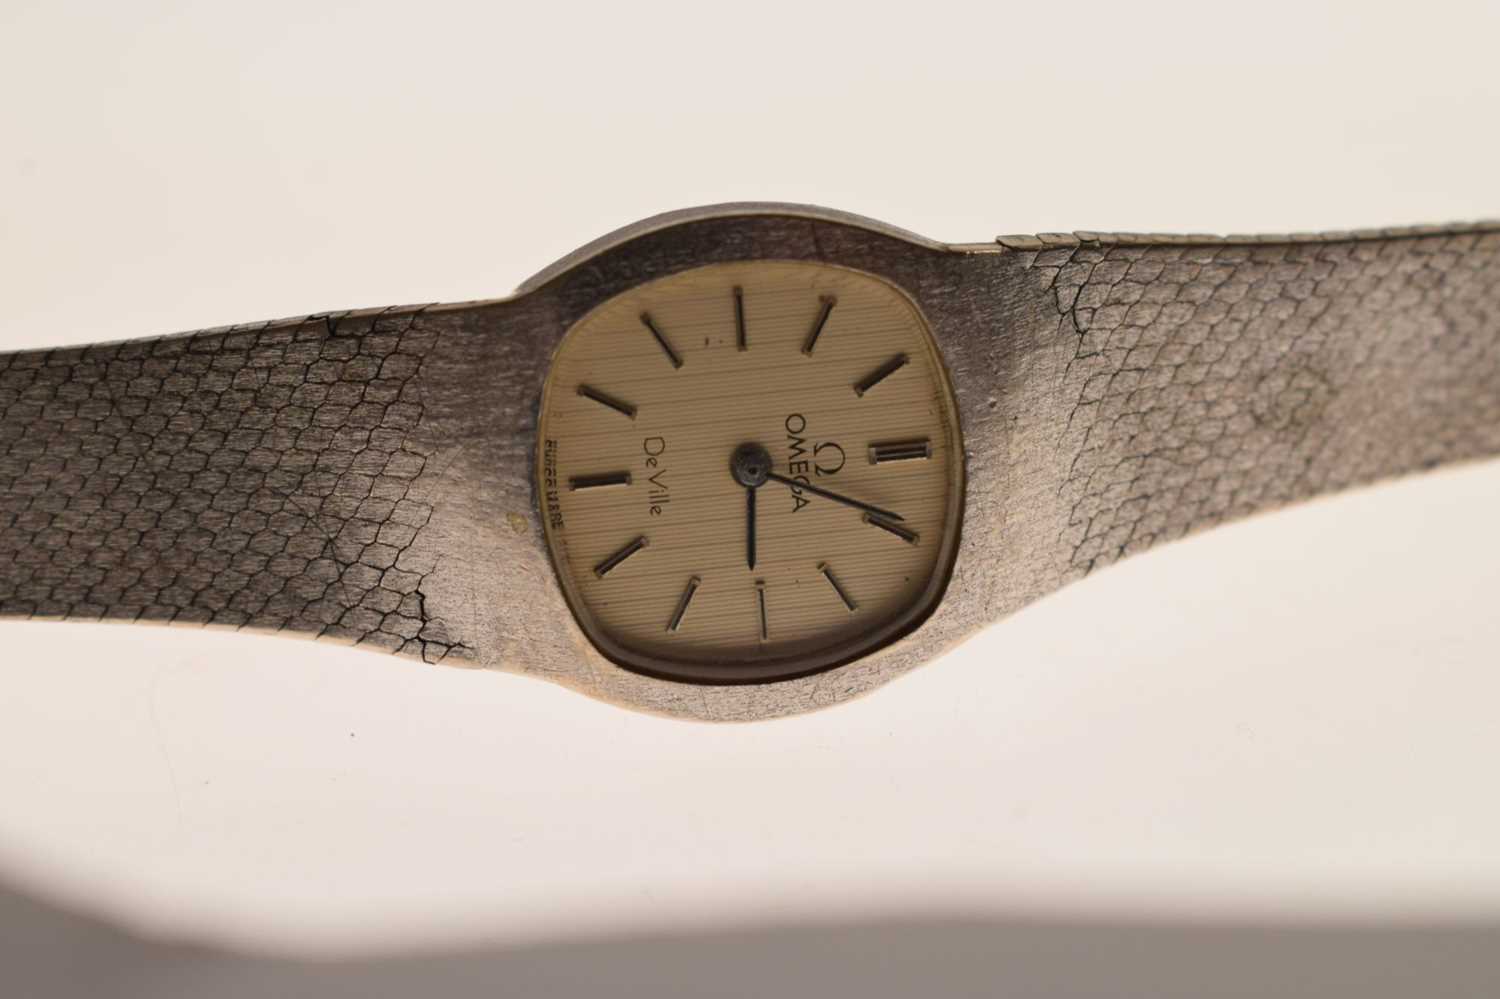 Omega - Lady's De Ville silver '925' bracelet watch - Image 5 of 9